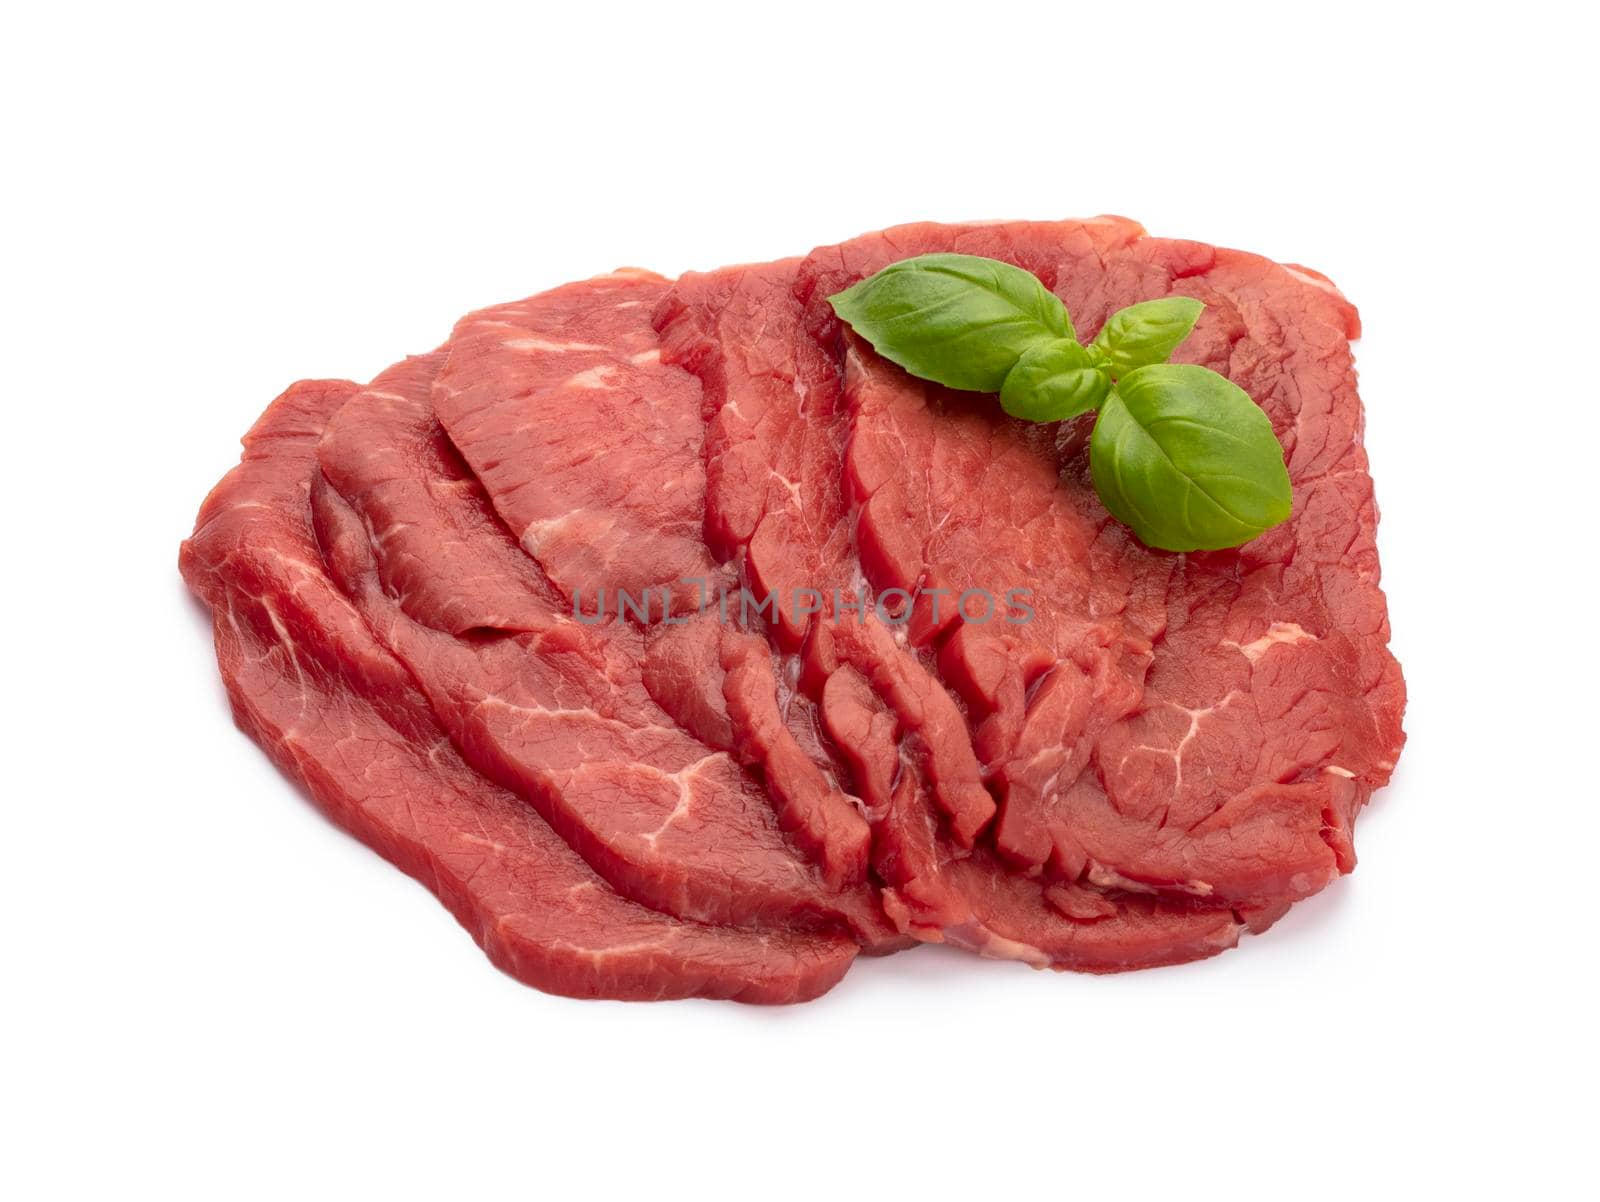 Bio fresh steak isolated on a white background. 